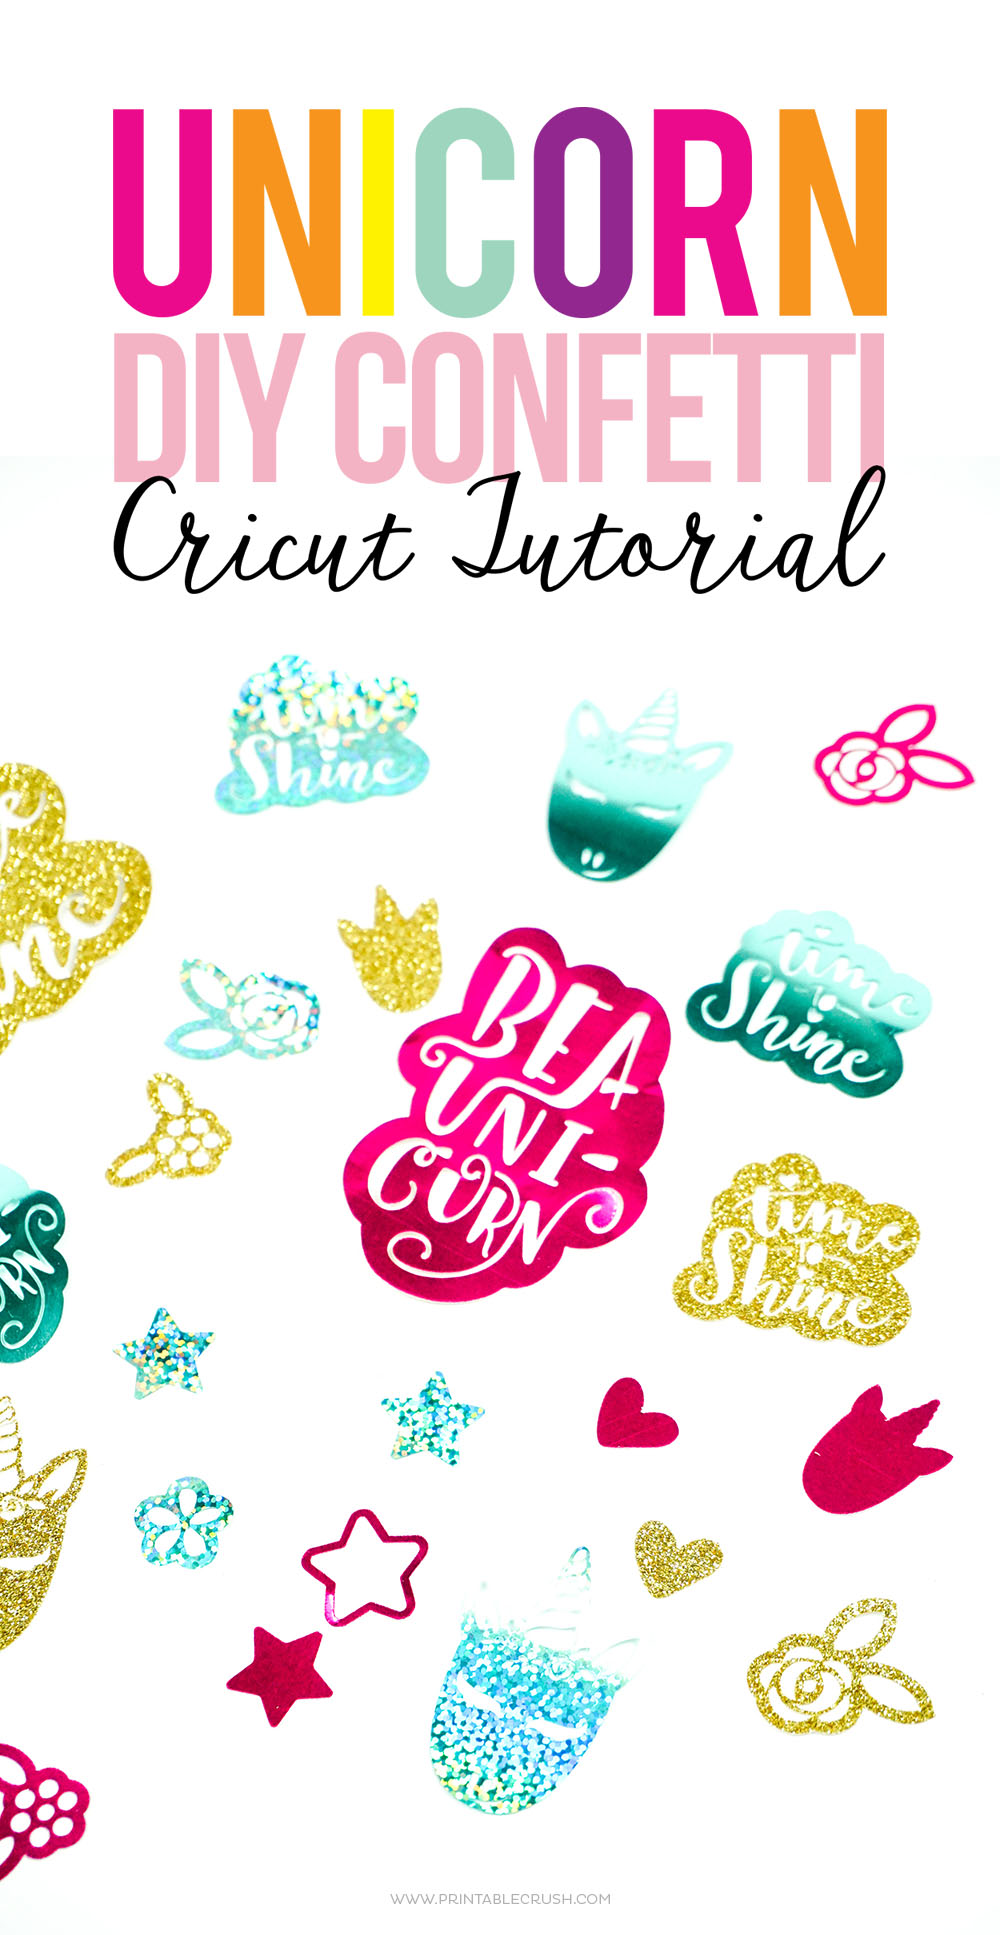 Unicorn DIY Confetti Cricut Tutorial - Printable Crush